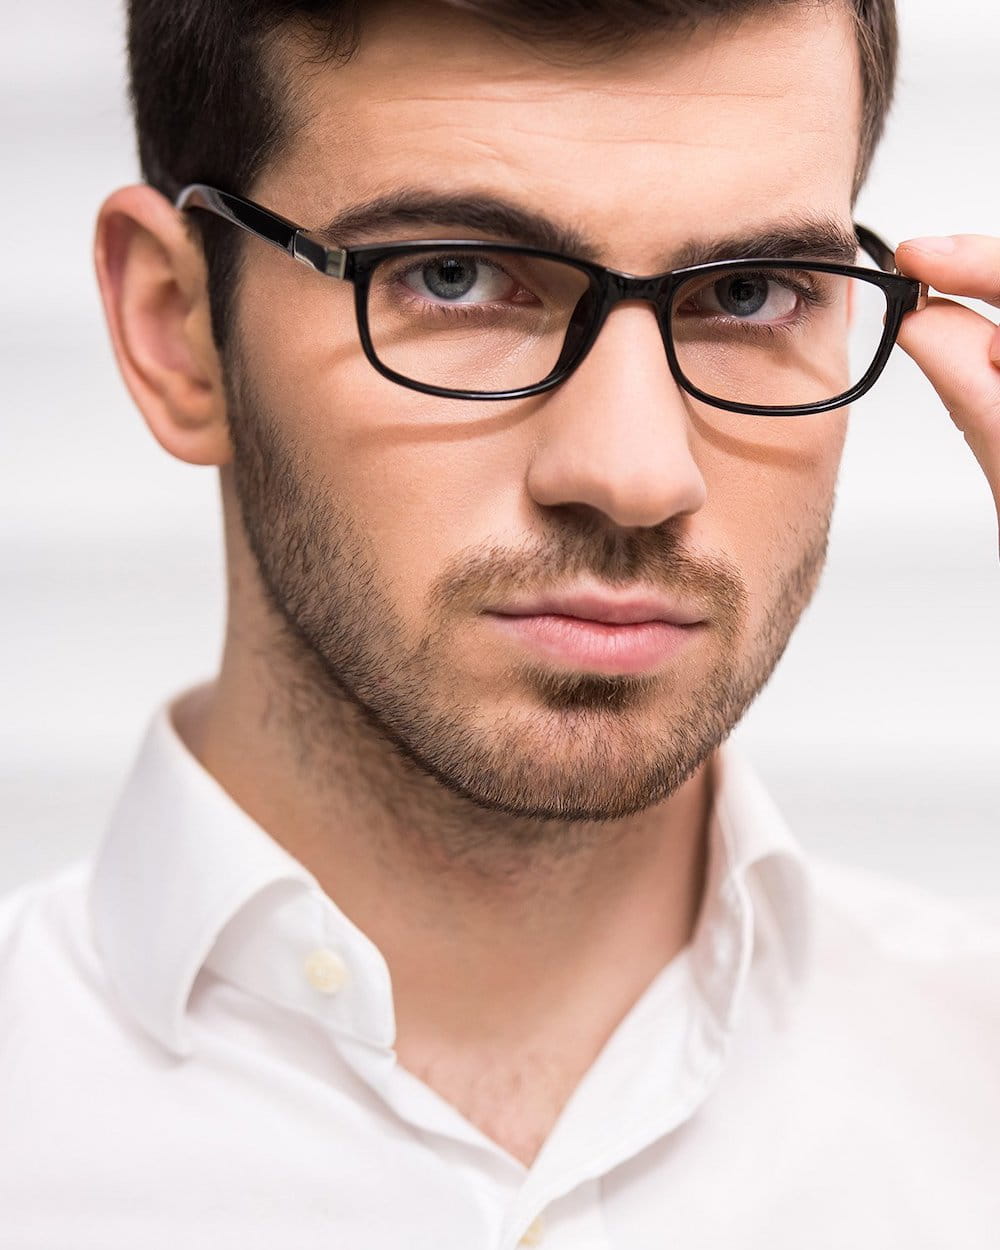 PRP Hair Restoration patient model wearing glasses